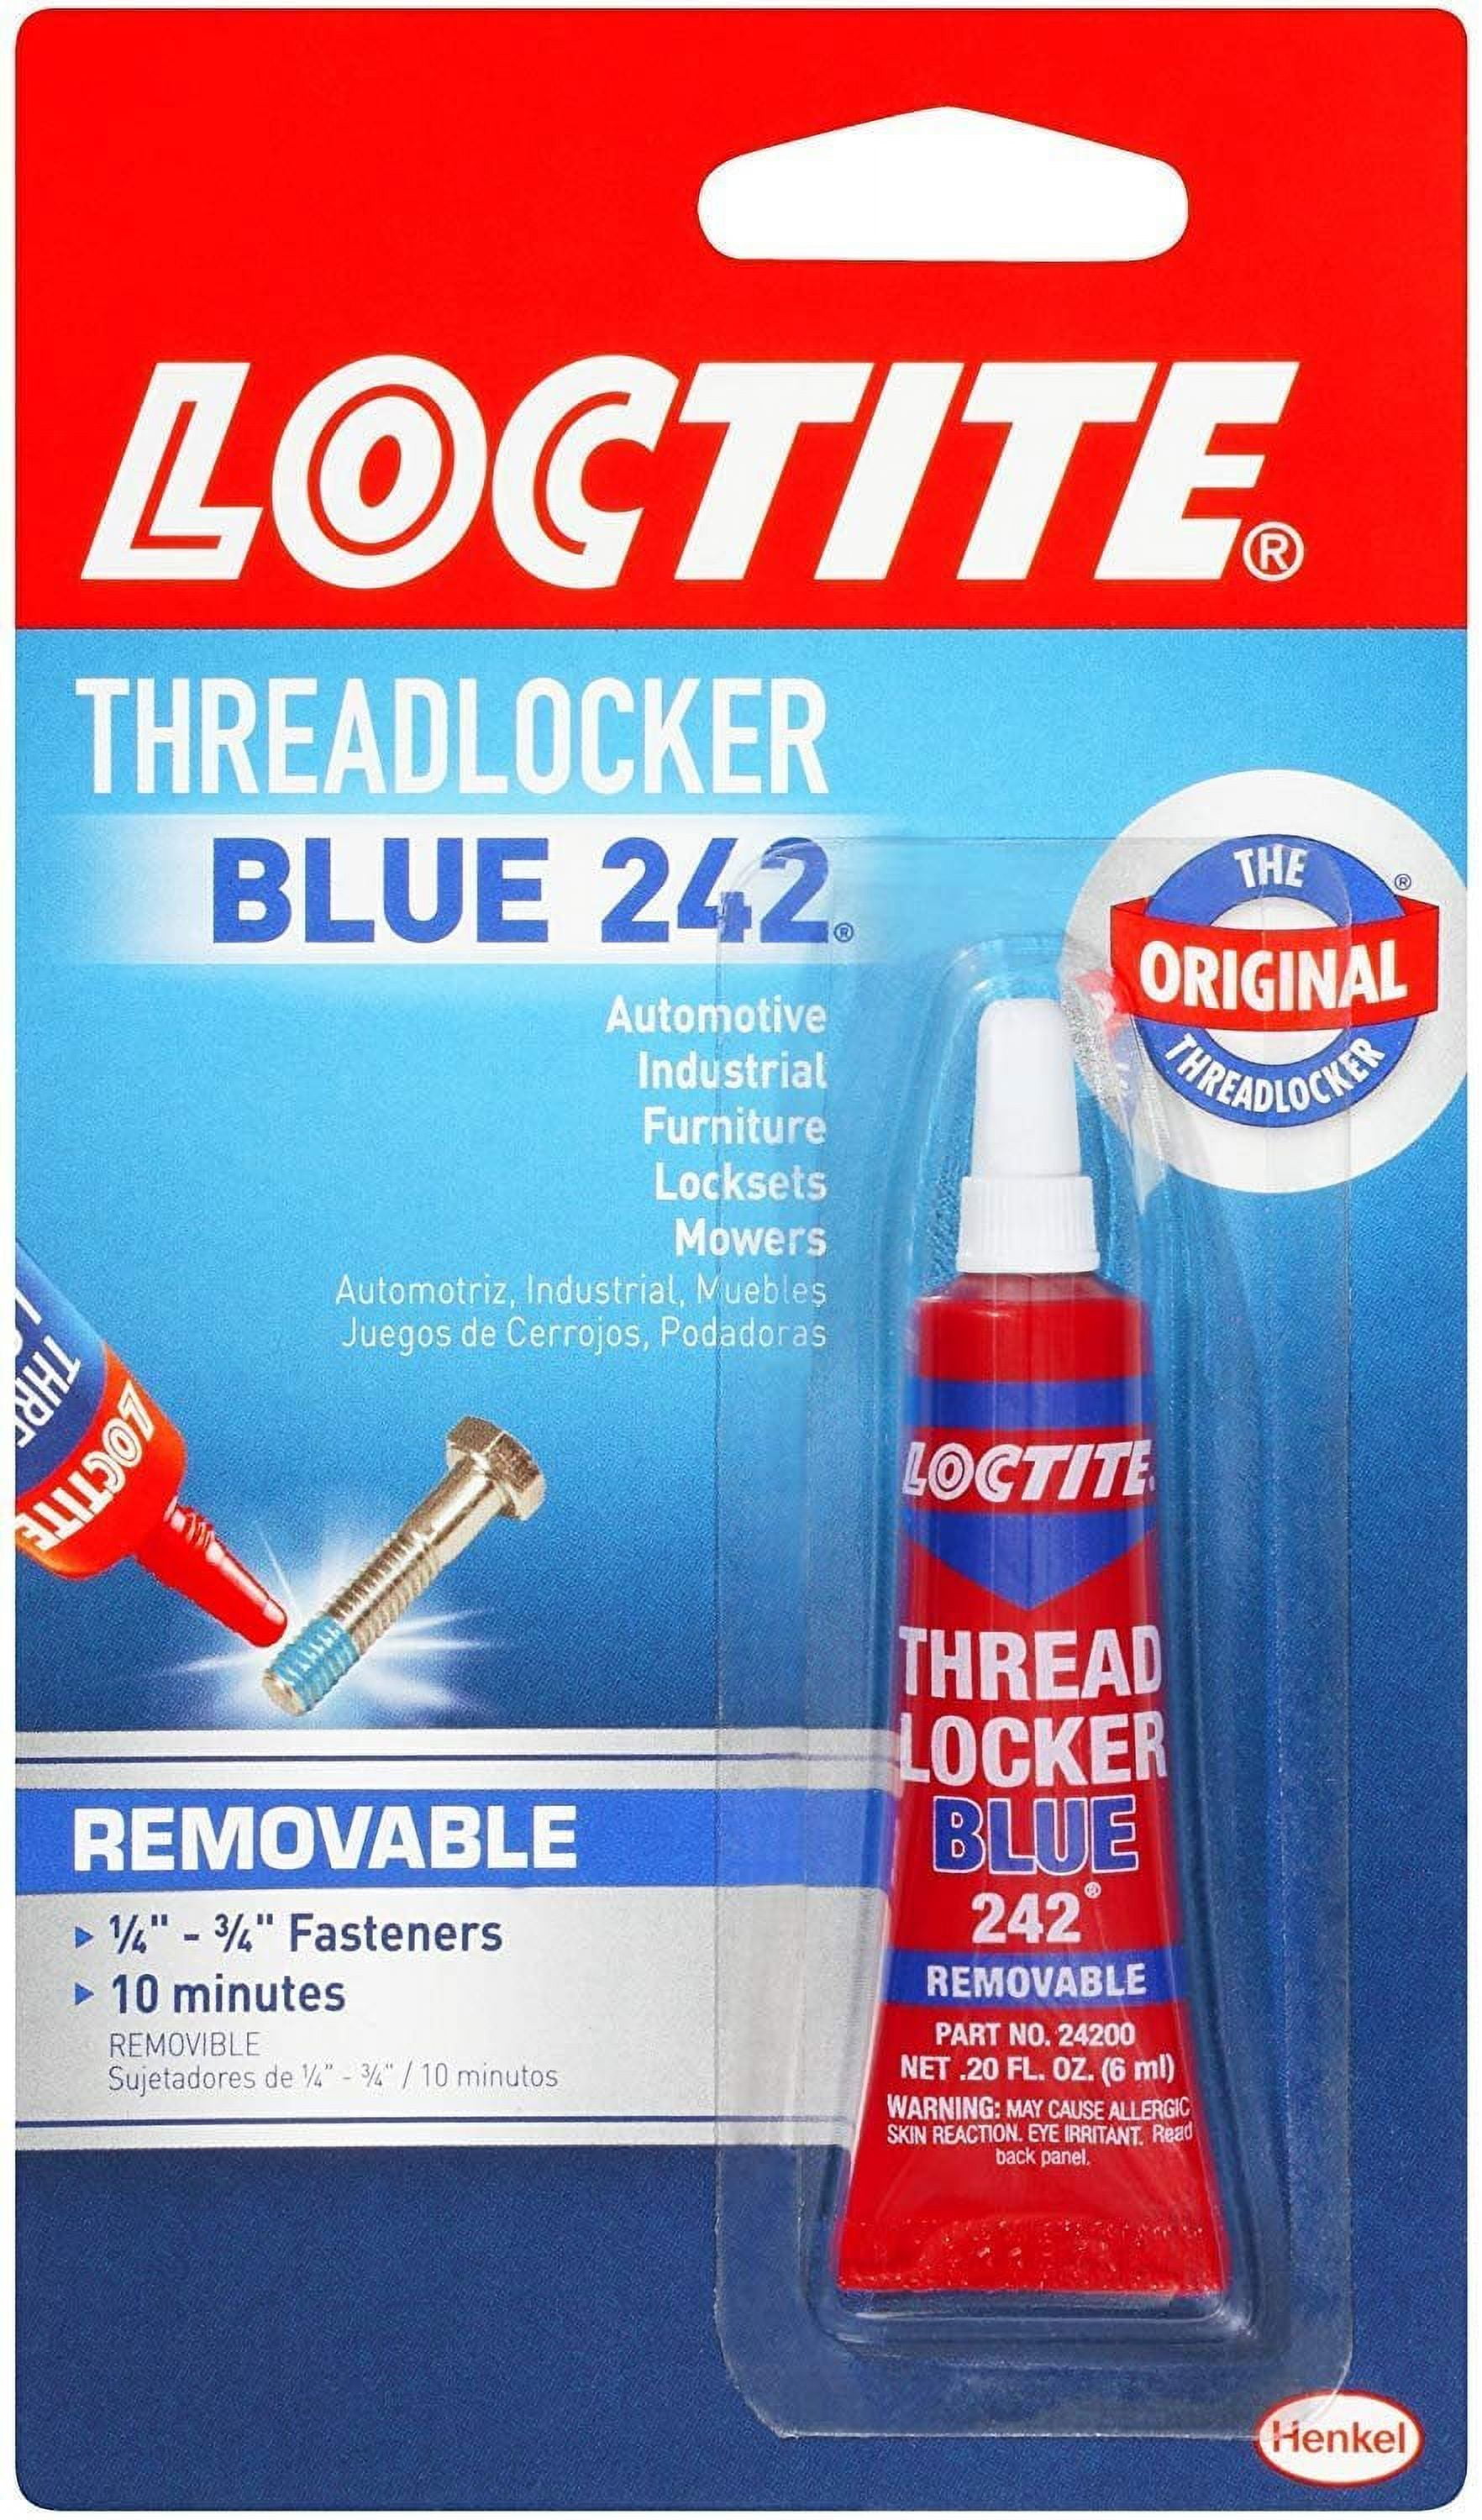 Loctite Heavy Duty Threadlocker, 0.2 oz, Blue 242, 12 Pack 